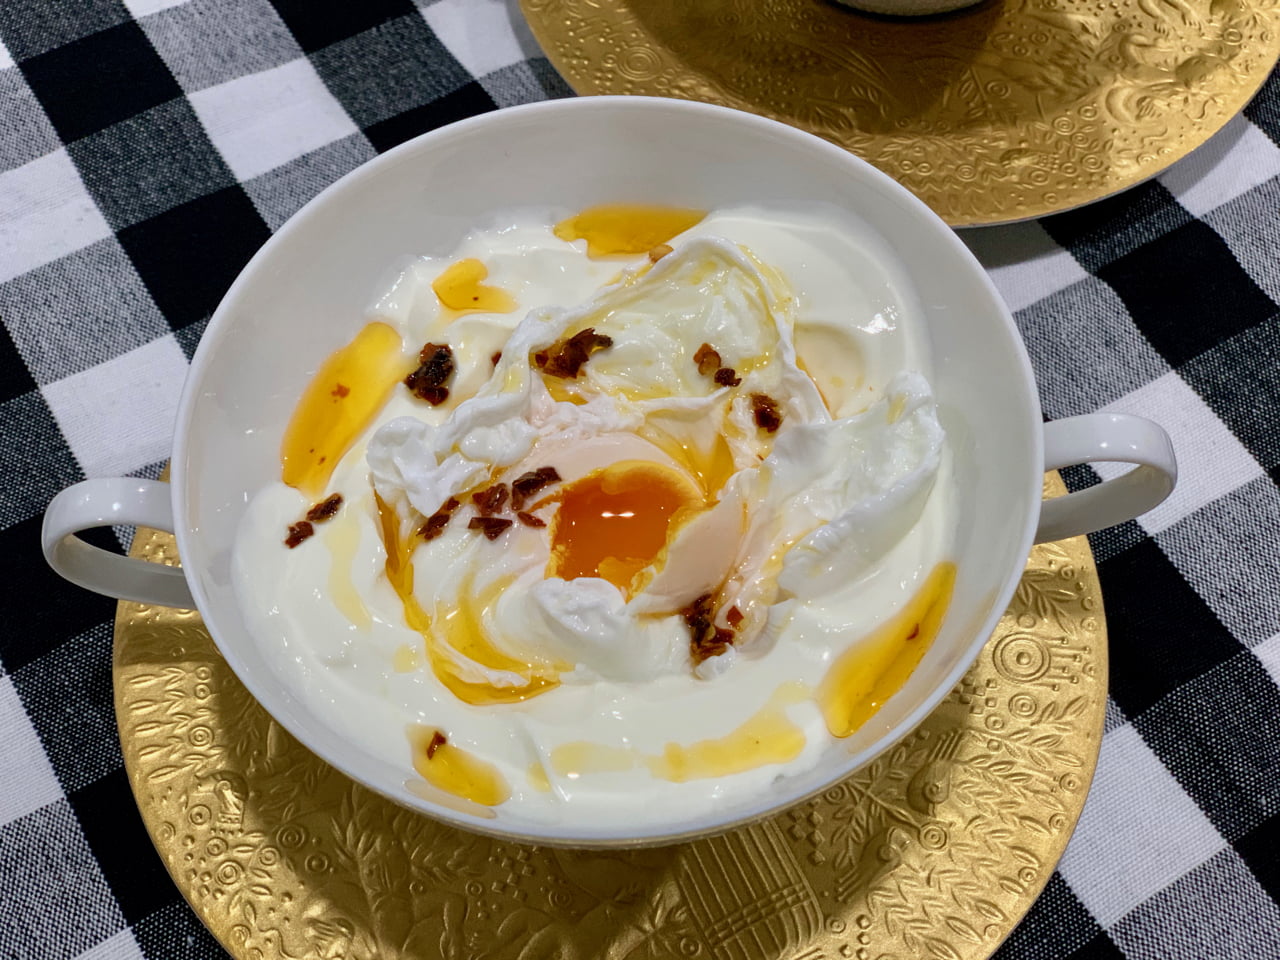 Cilbir - Perfectly Poached Turkish Eggs Over Yogurt